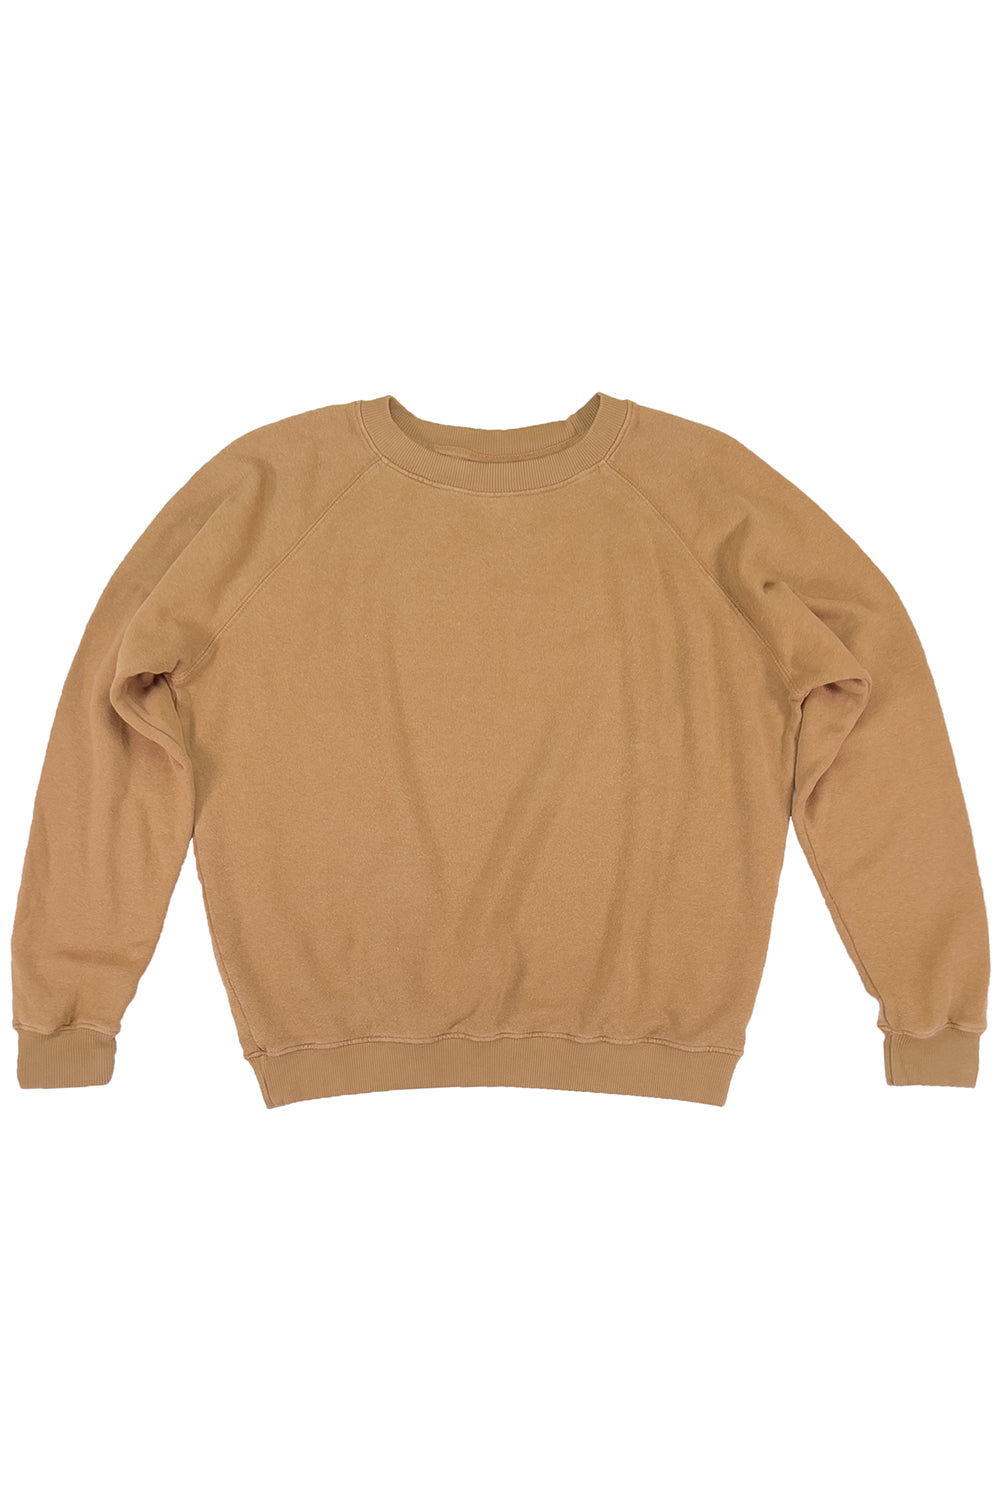 Bonfire Raglan Sweatshirt | Jungmaven Clothing Hemp